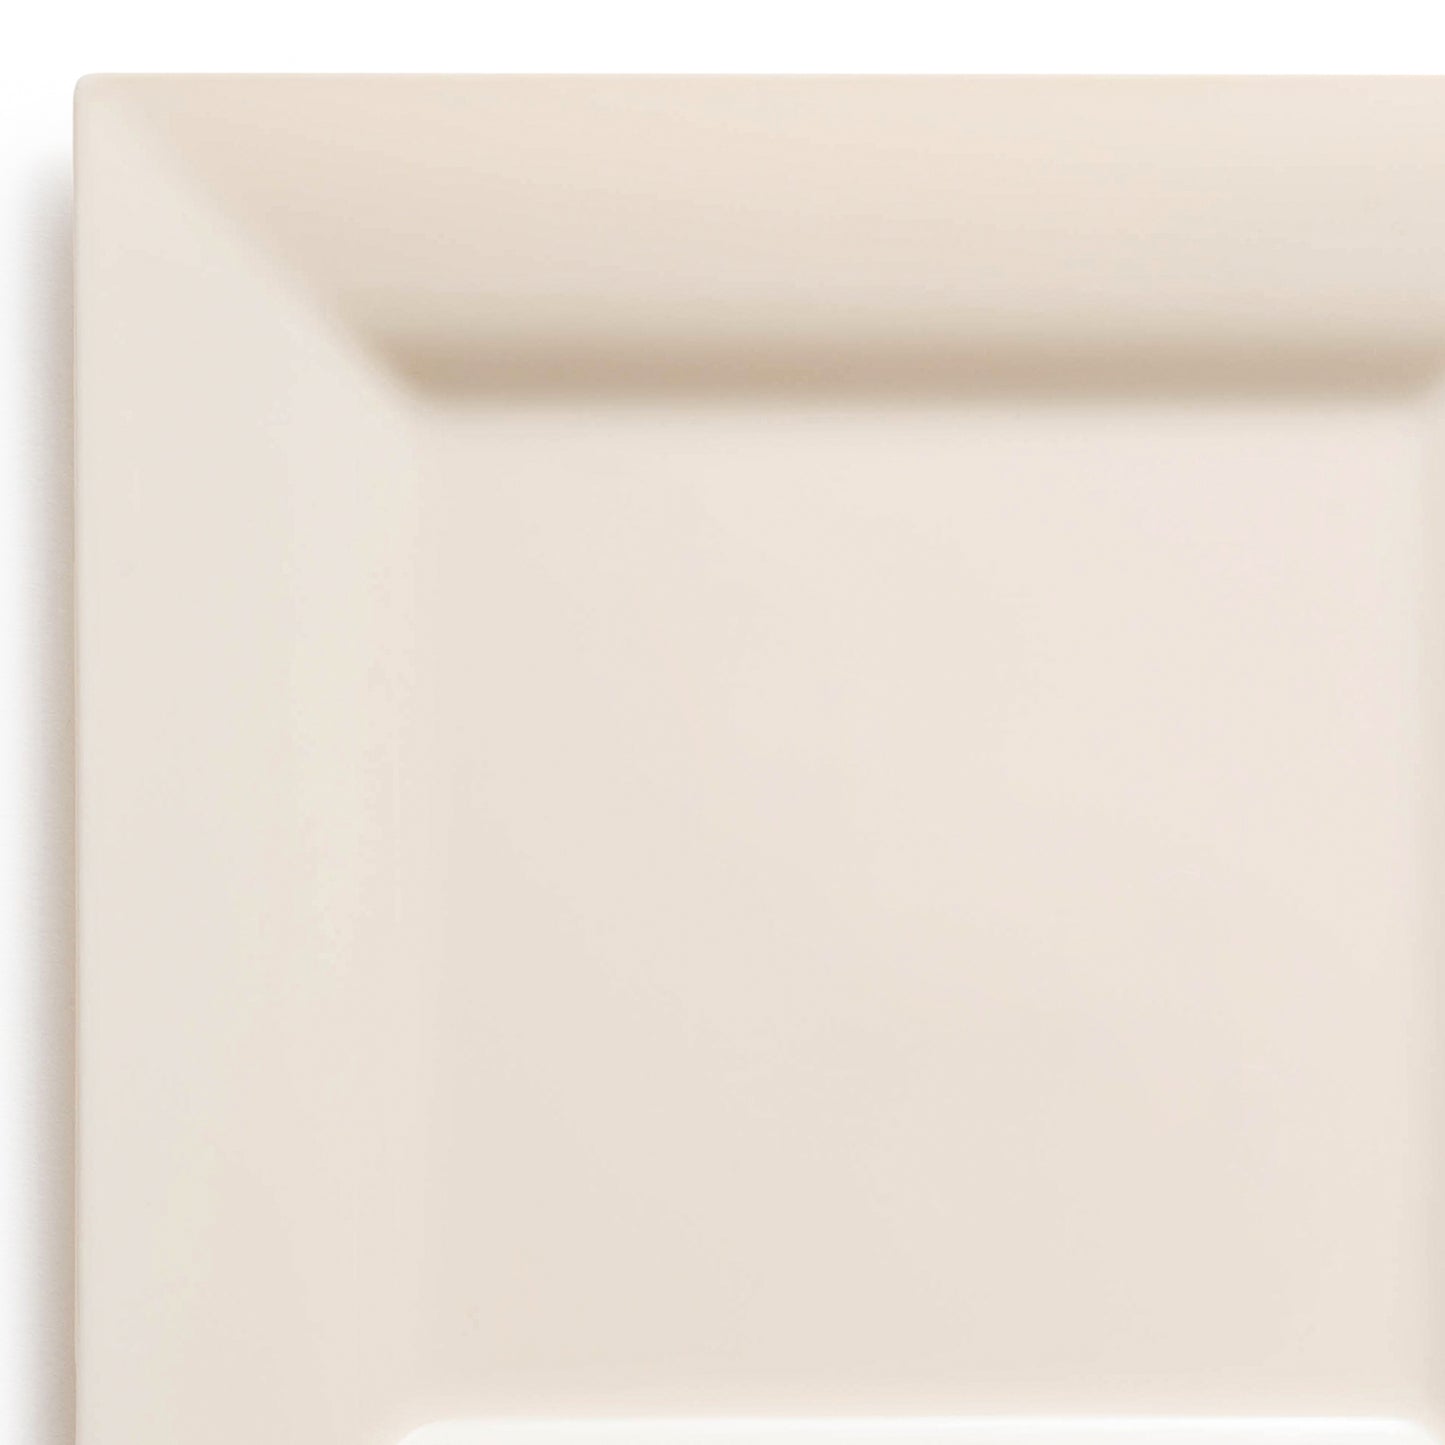 Ivory Square Disposable Plastic Cake Plates (6.5")